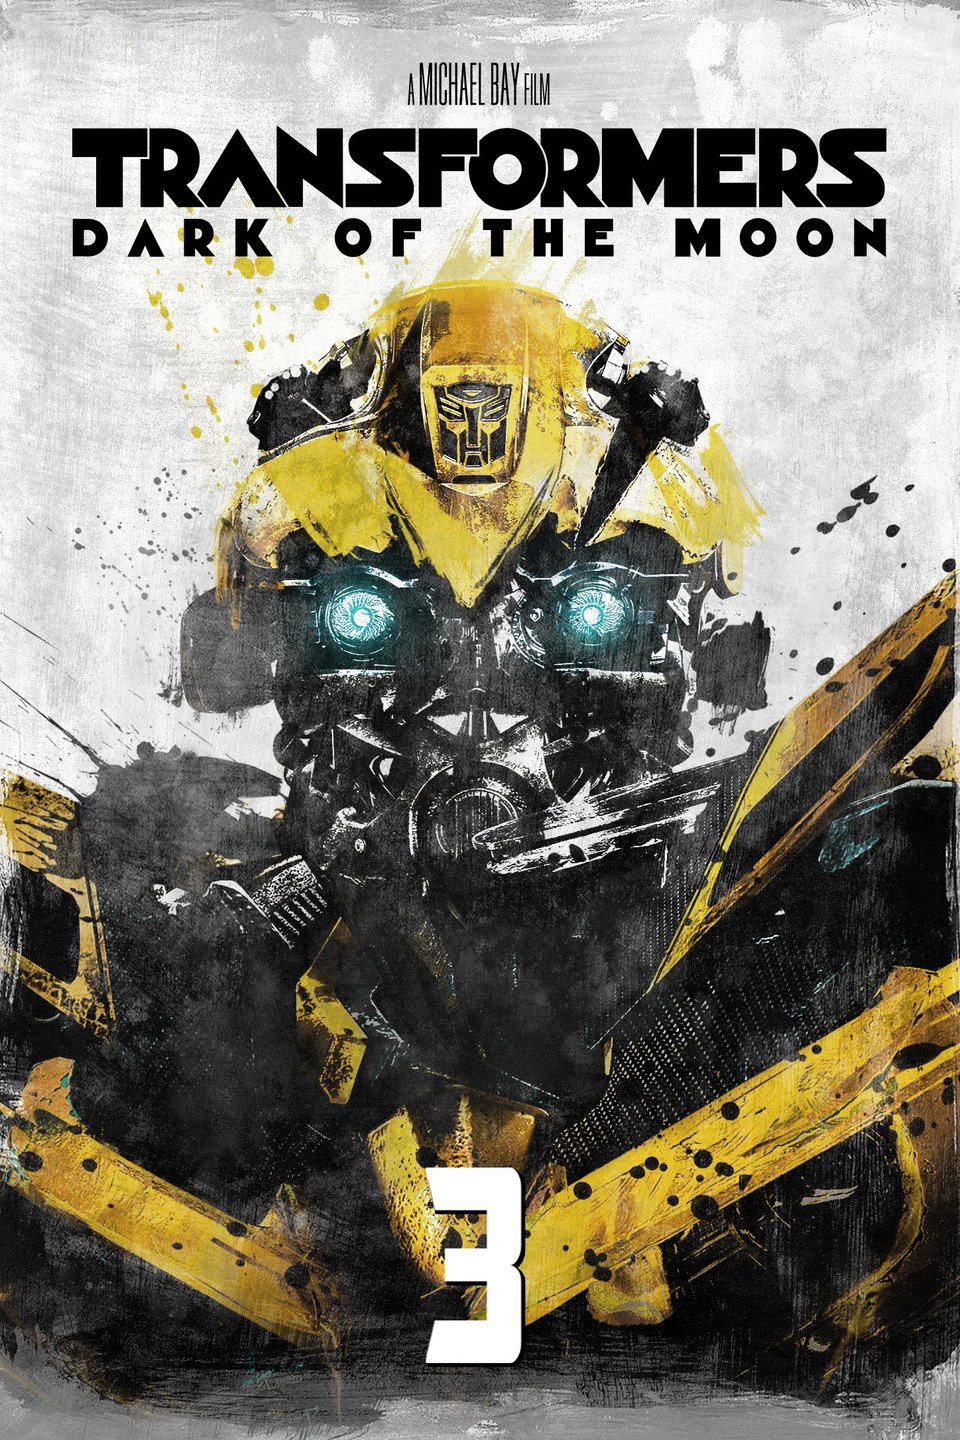 [MINI Super-HQ] Transformers: Dark of the Moon (2011) ทรานส์ฟอร์มเมอร์ส ดาร์ค ออฟ เดอะ มูน ภาค 3 [1080p] [พากย์ไทย 5.1 + อังกฤษ DTS] [BluRay.DTS.x264] [บรรยายไทย + อังกฤษ] [เสียงไทยมาสเตอร์ + ซับไทย] [ONE2UP]